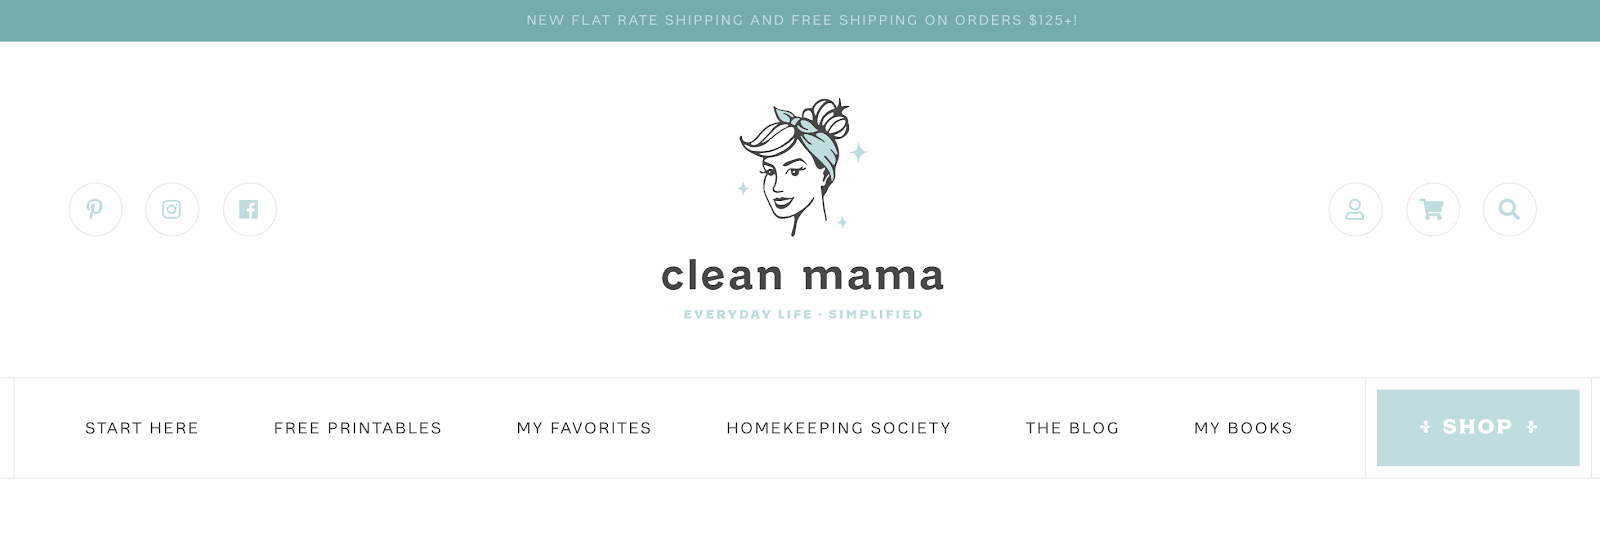 Clean Mama Homepage Screenshot (Menu Example)